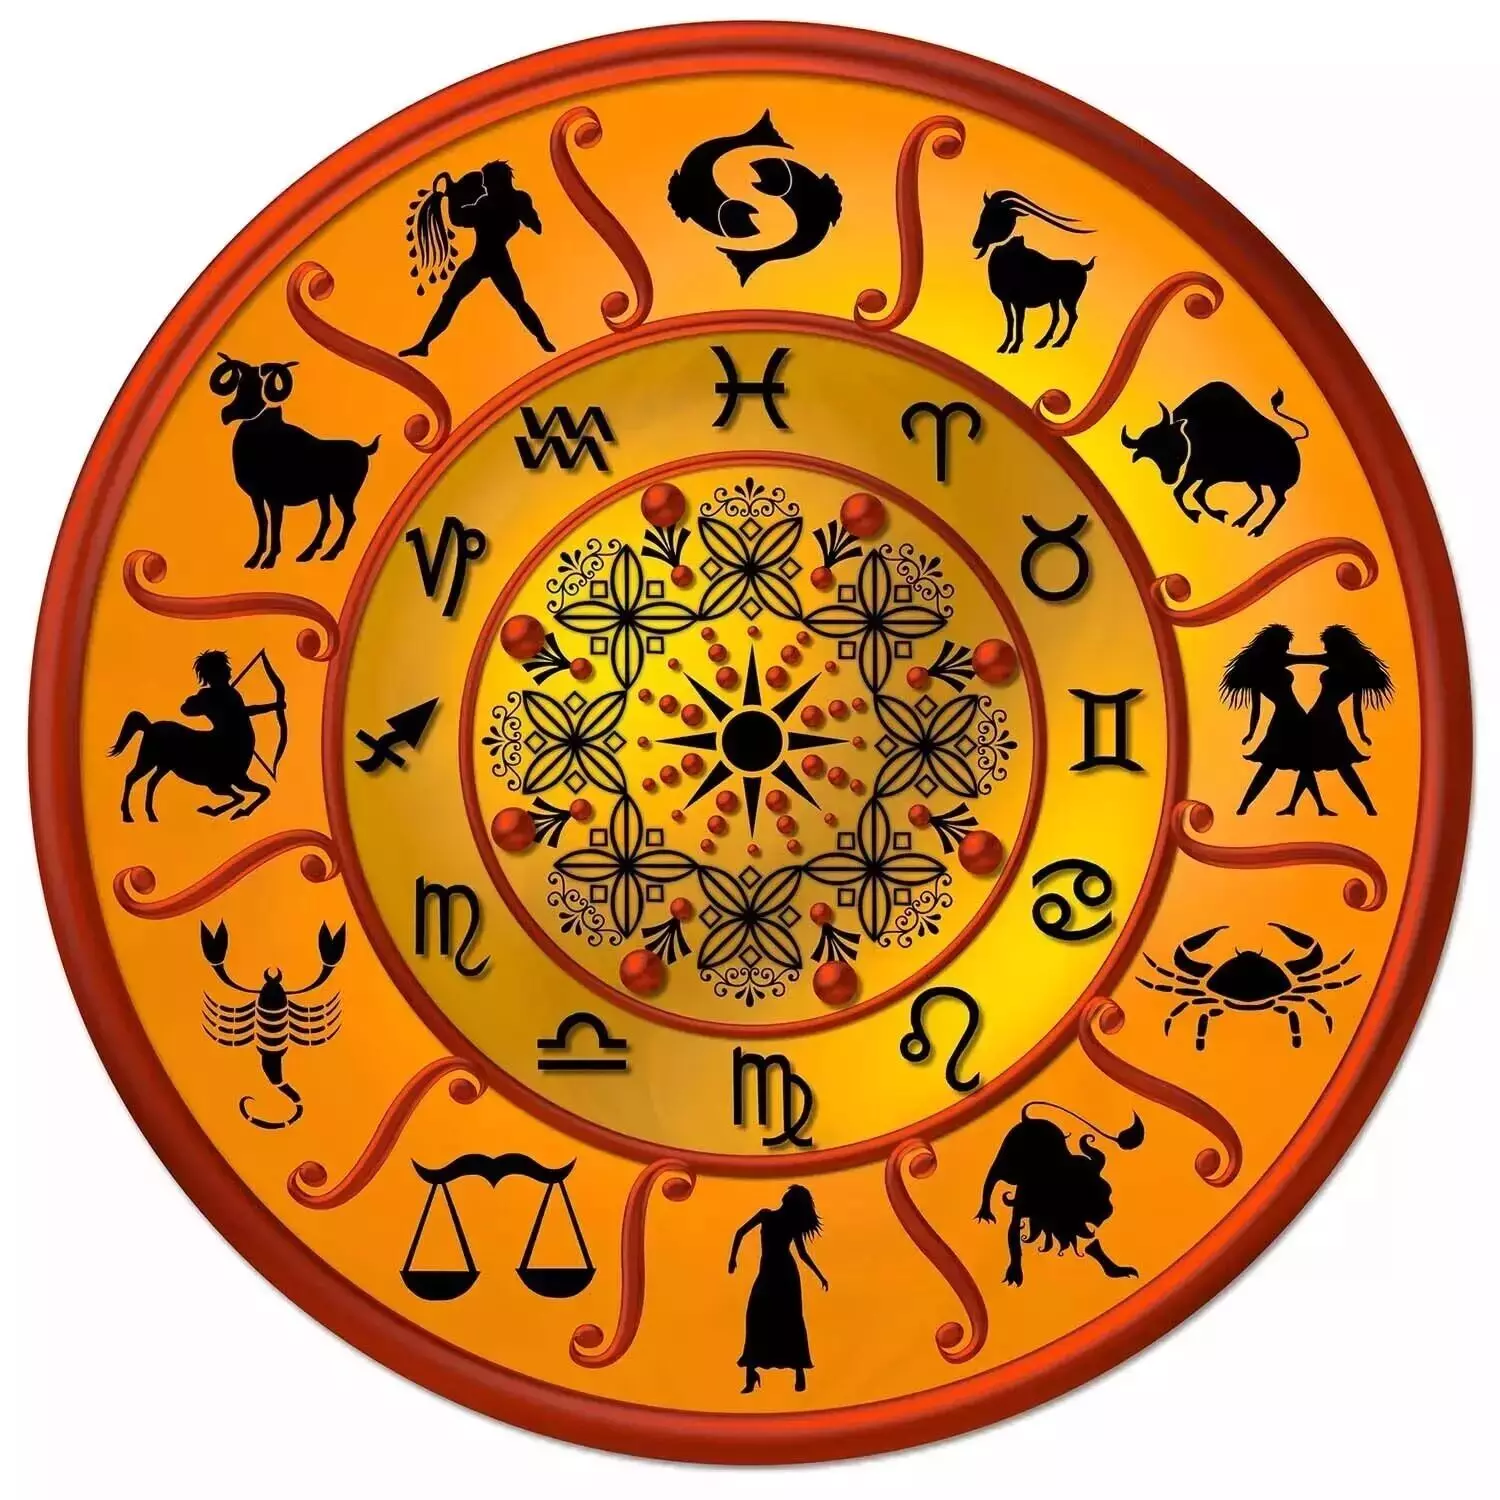 13 November – Know your todays horoscope